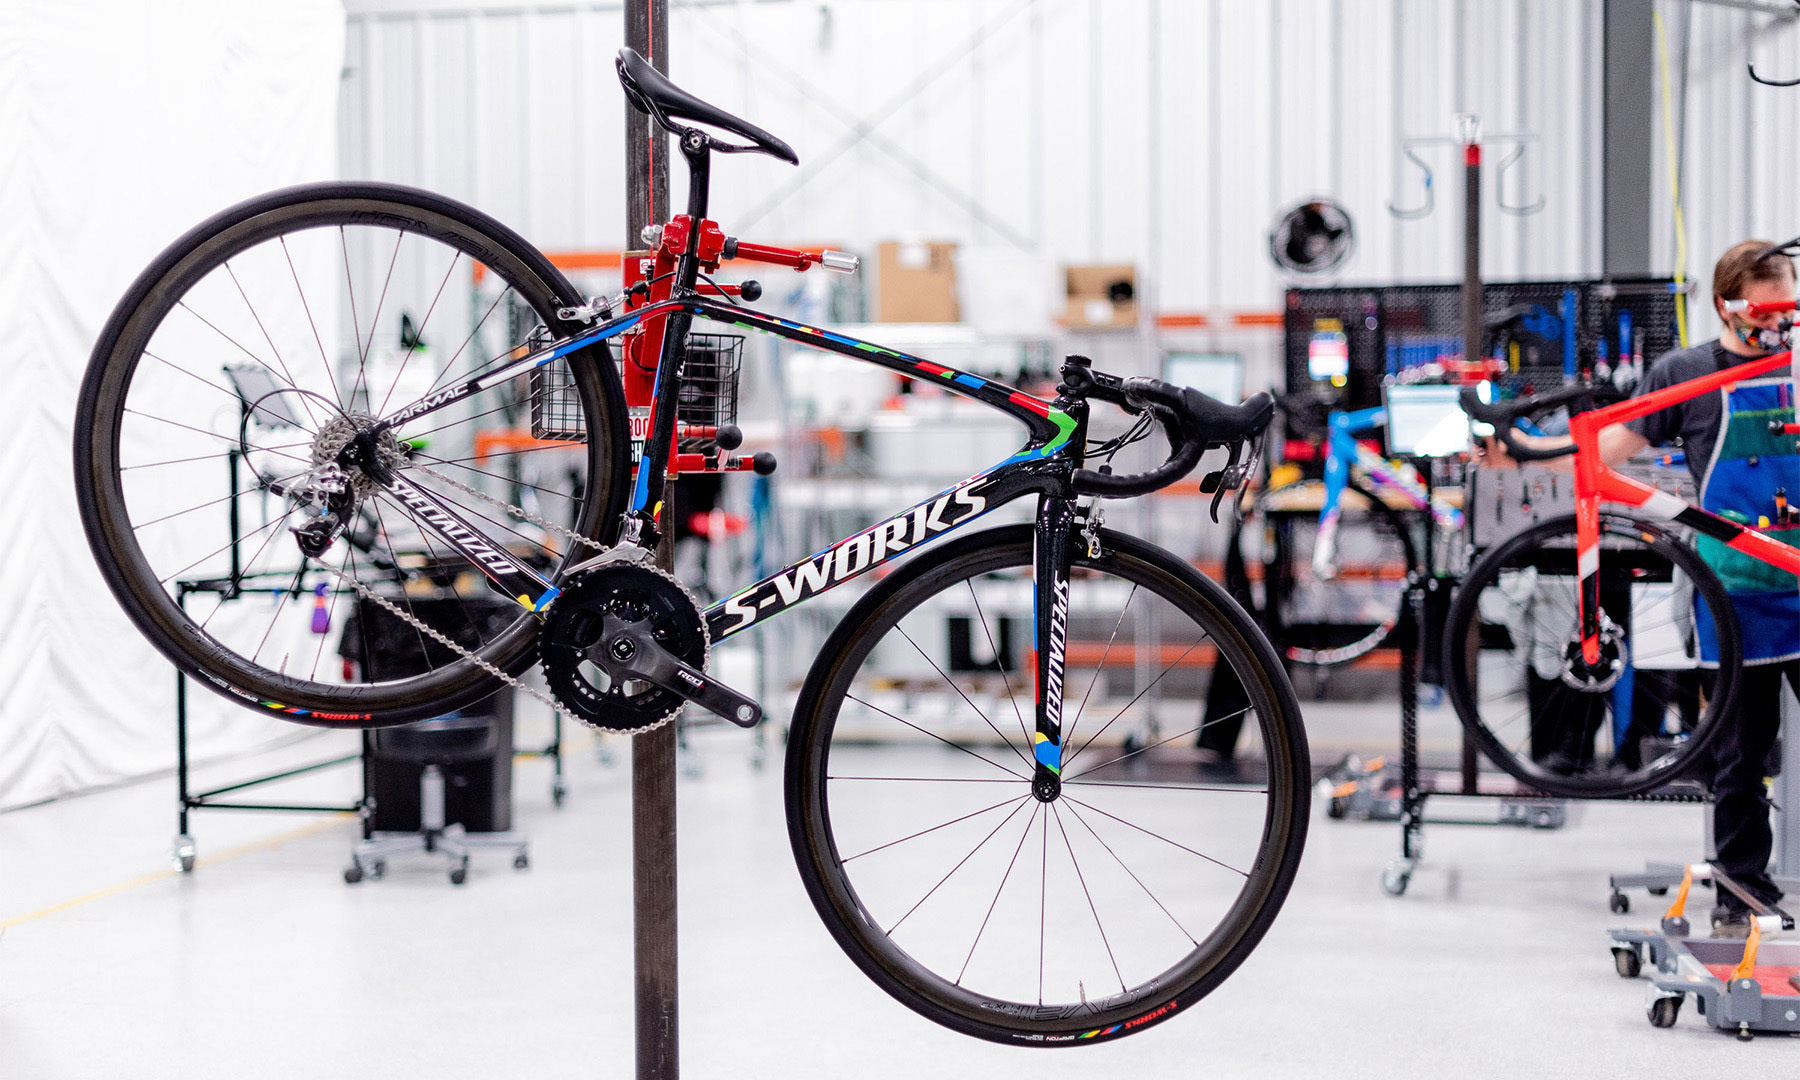 Carbon bike vs aluminum bike weight